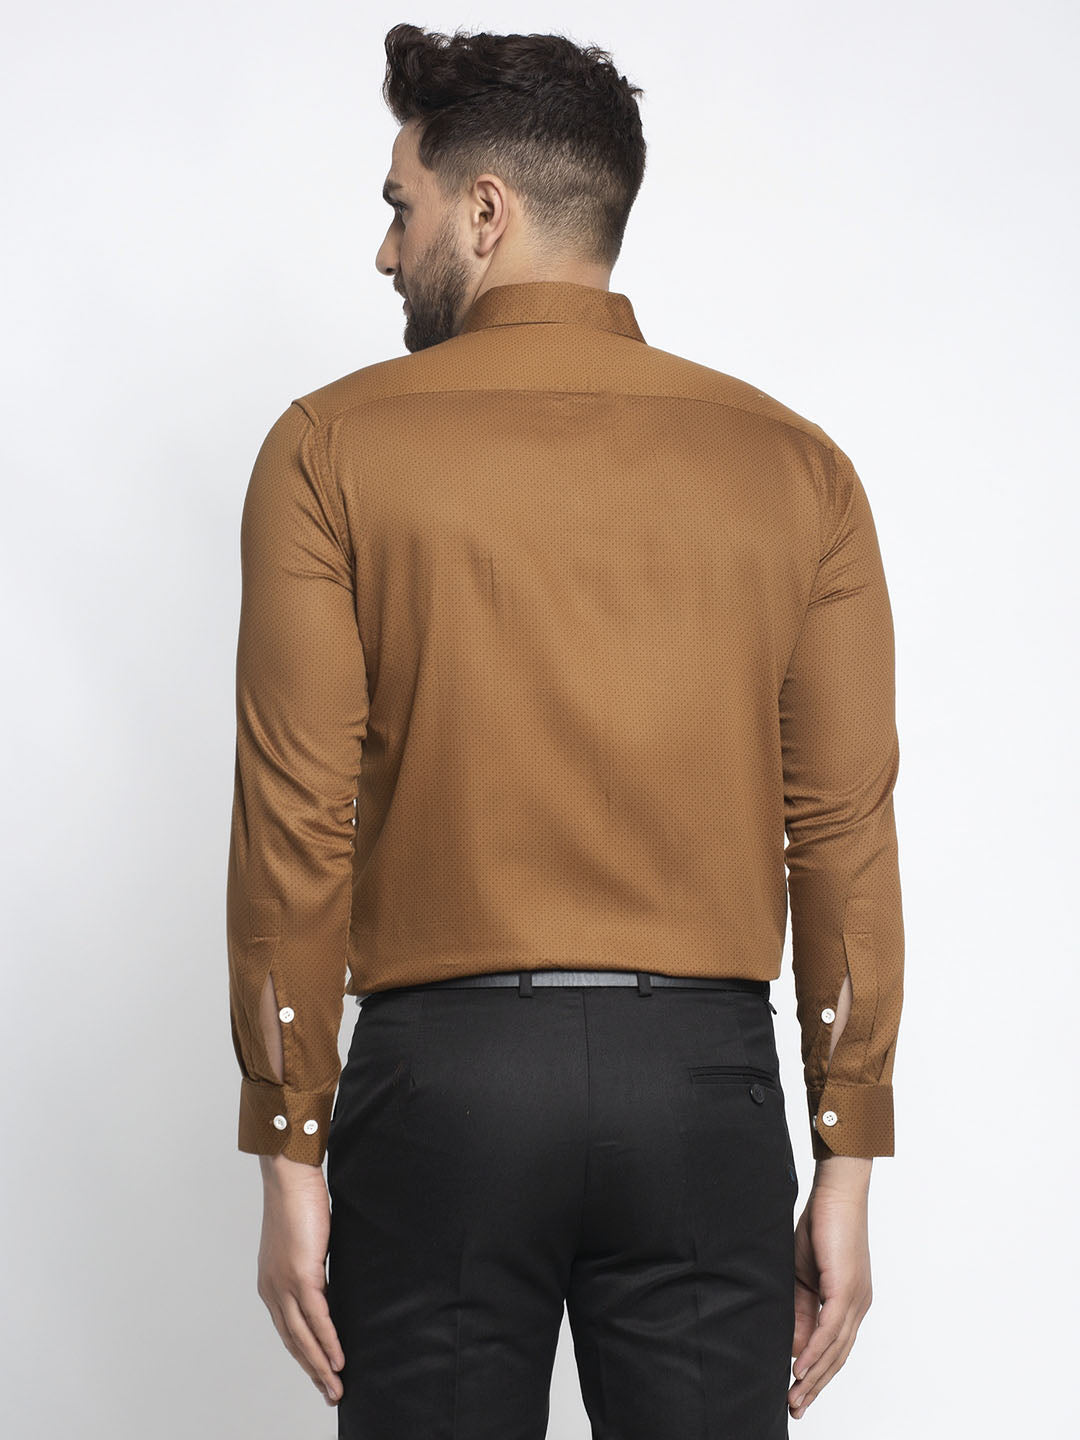 Men's Brown Cotton Polka Dots Formal Shirts ( SF 736Dark-Brown ) - Jainish